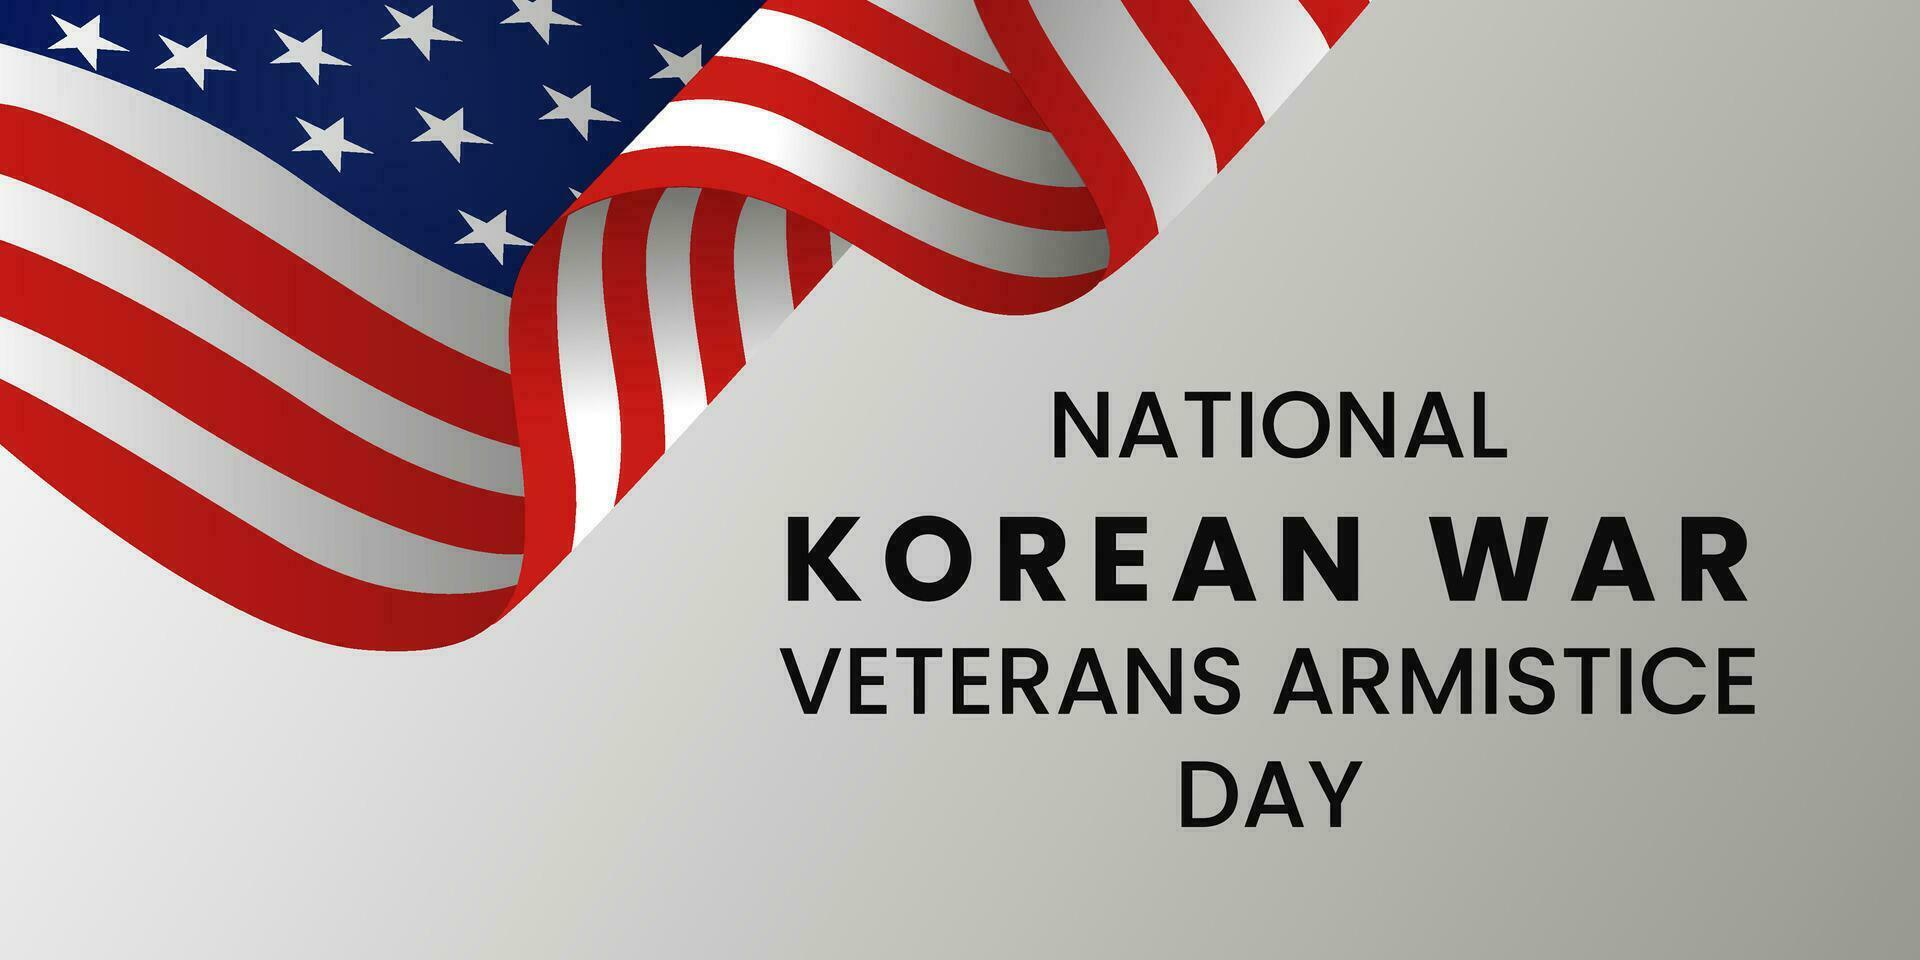 nationell koreanska krig veteraner vapenstillestånd dag på juli 27 med oss flagga. bakgrund vektor illustration.